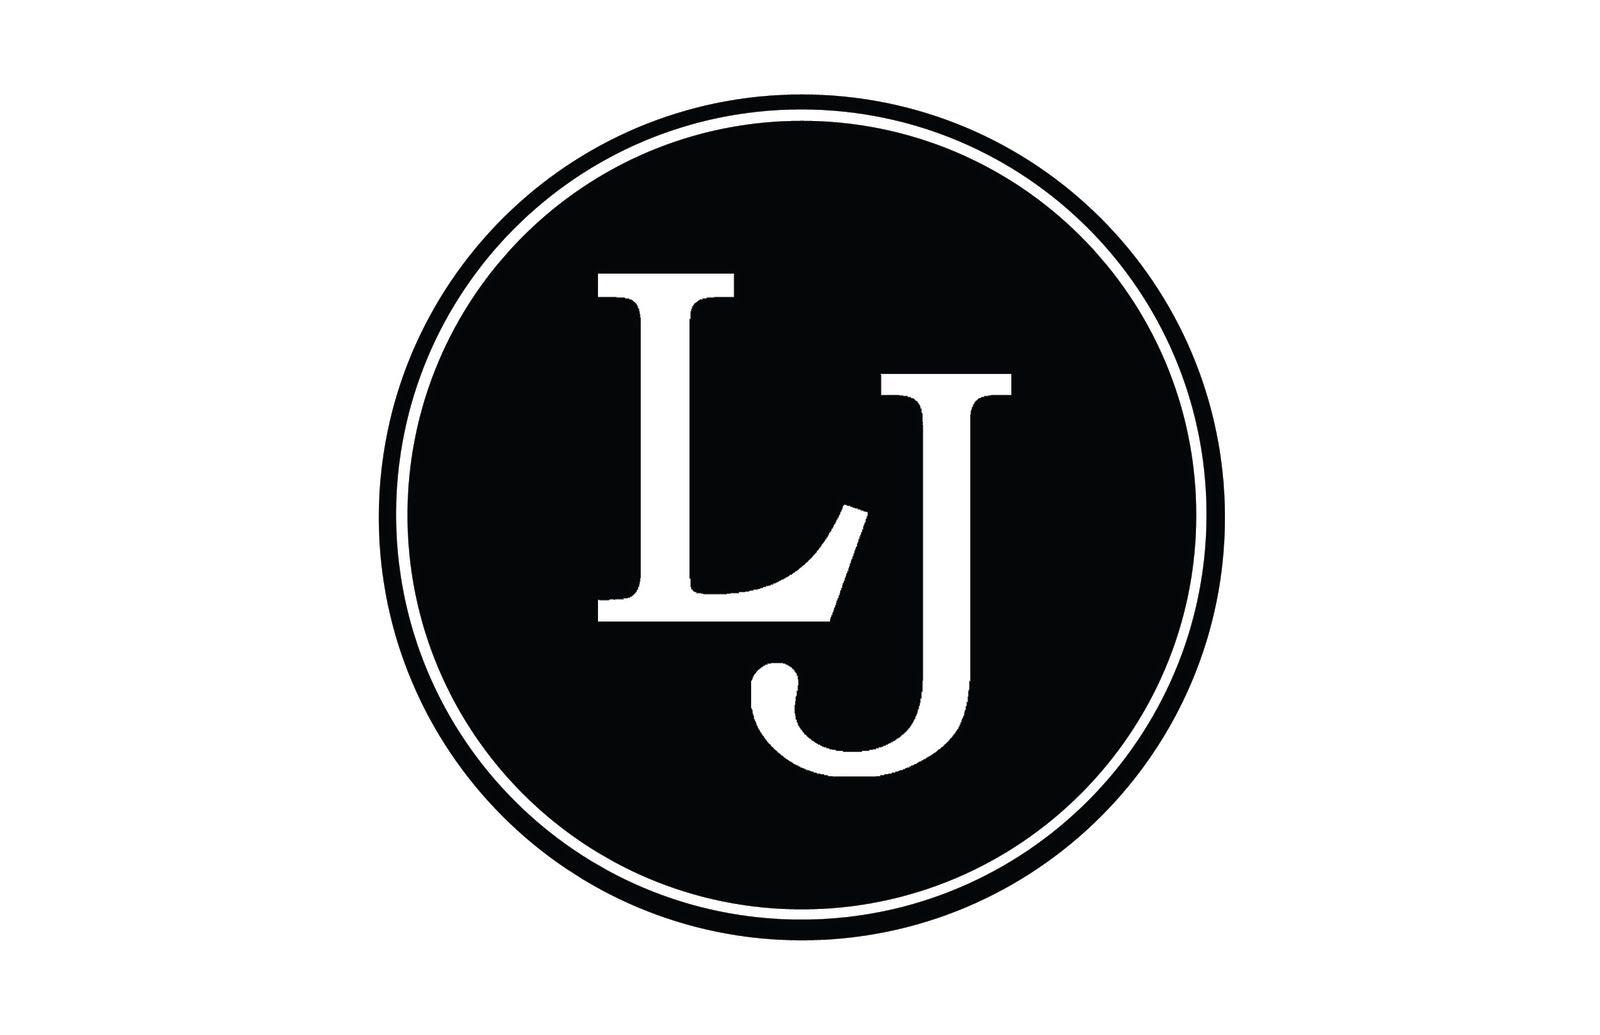 Letter Jl Logo: Over 2,676 Royalty-Free Licensable Stock Illustrations &  Drawings | Shutterstock